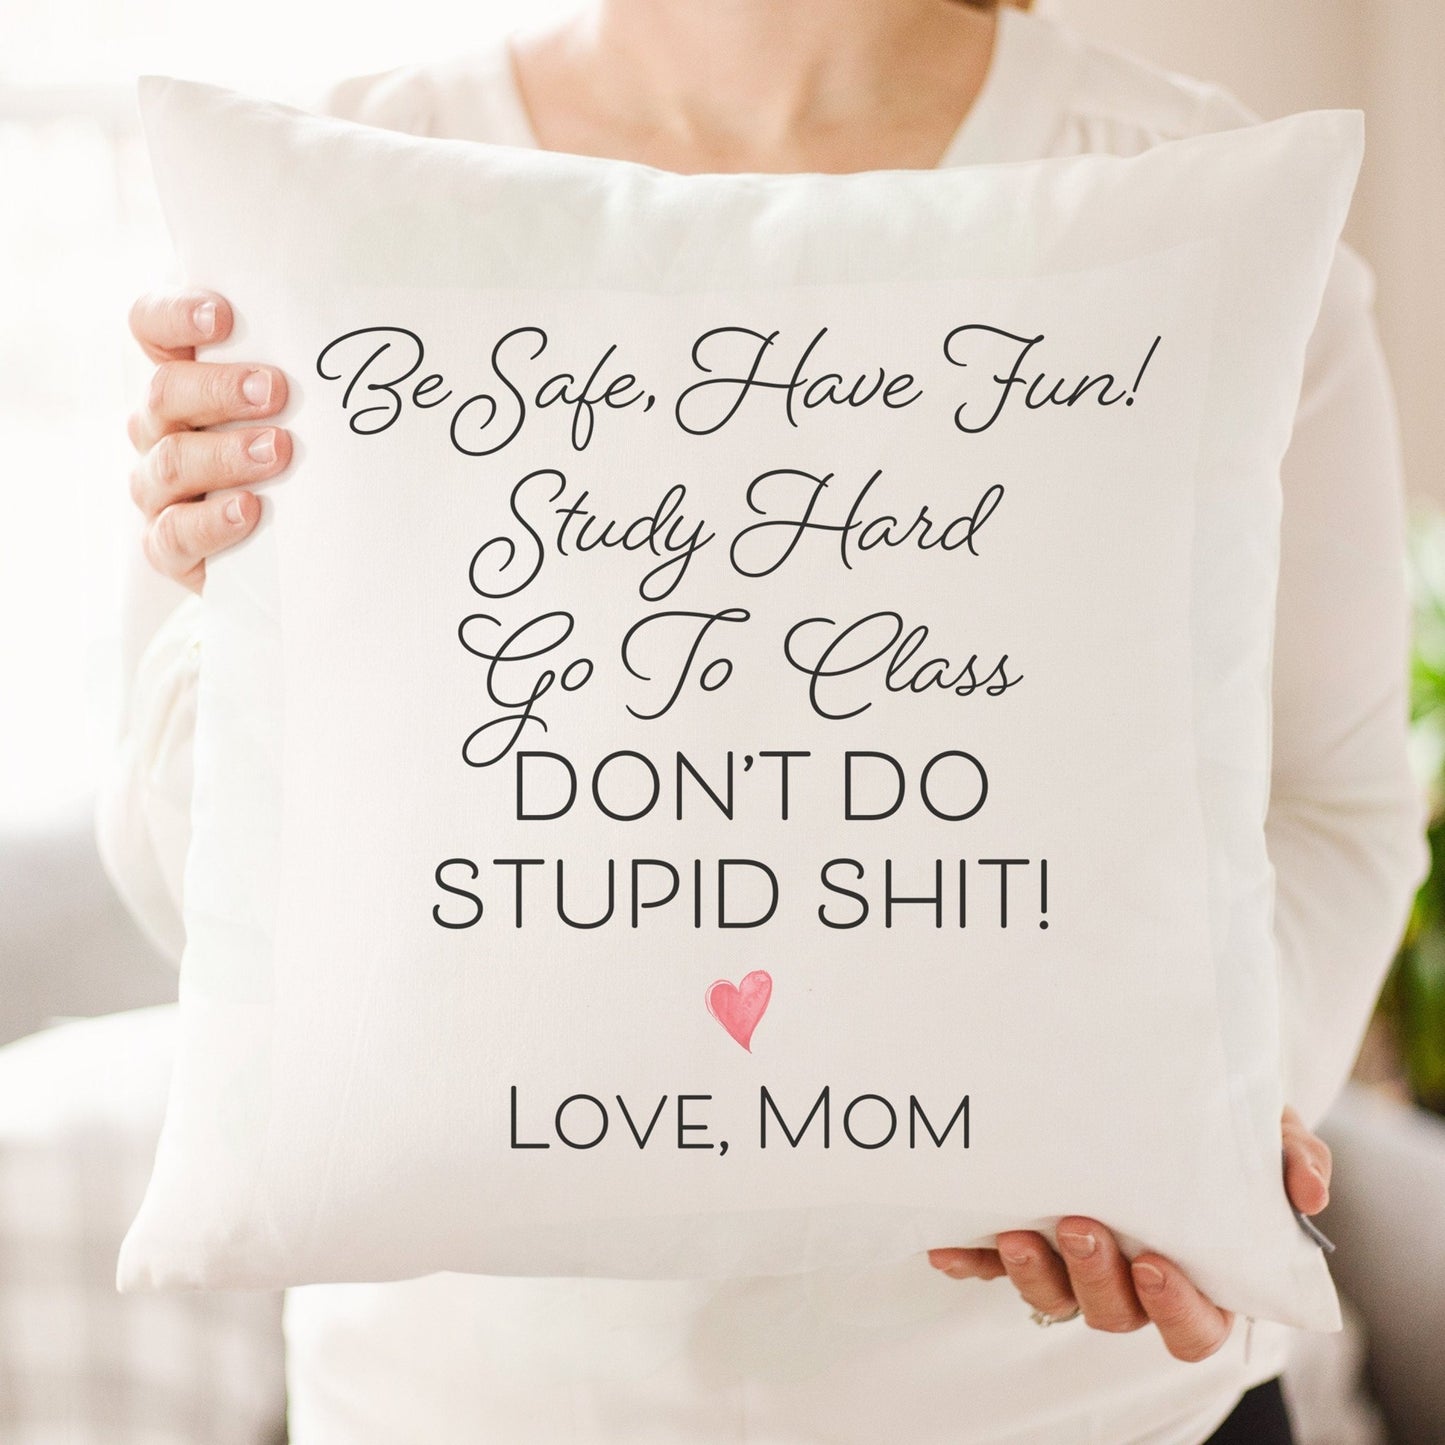 Don't do stupid shit love mom ornament